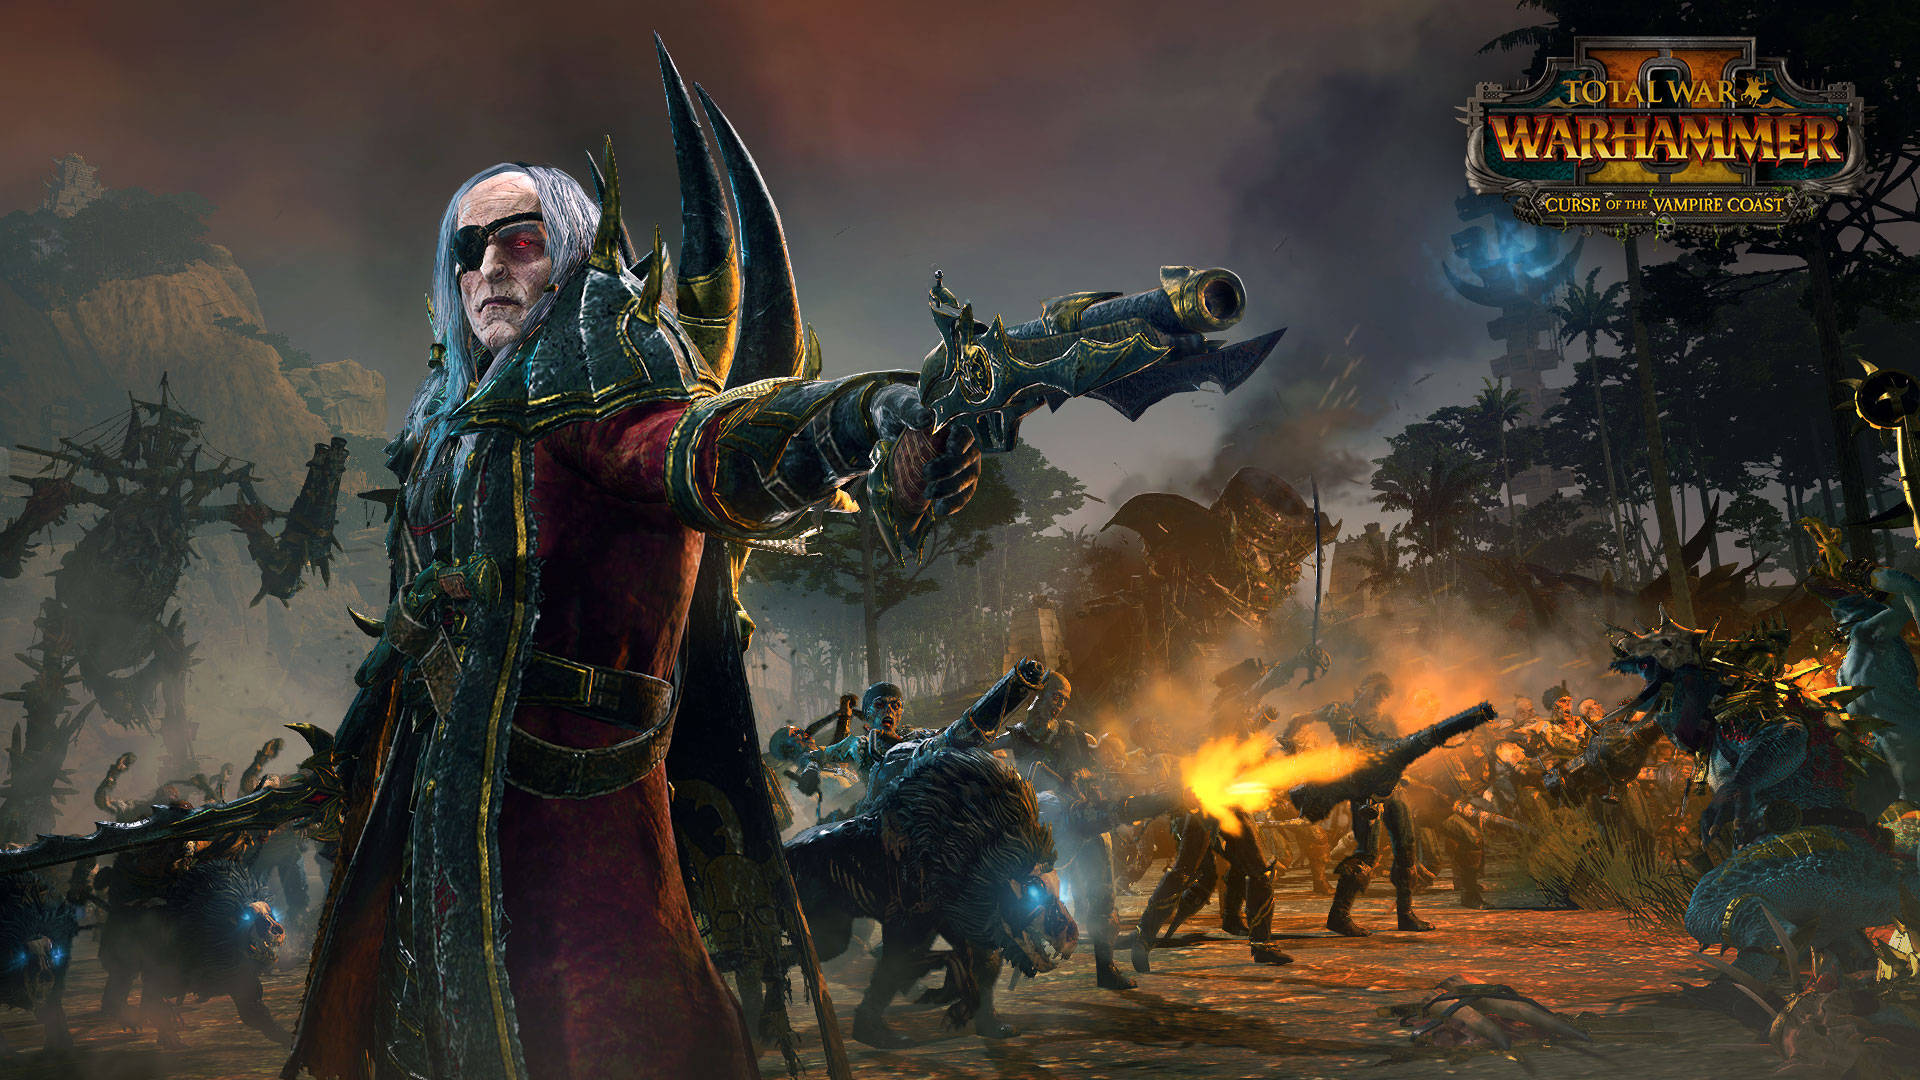 Warhammer Total War Vampire Coast Luthor Wallpaper